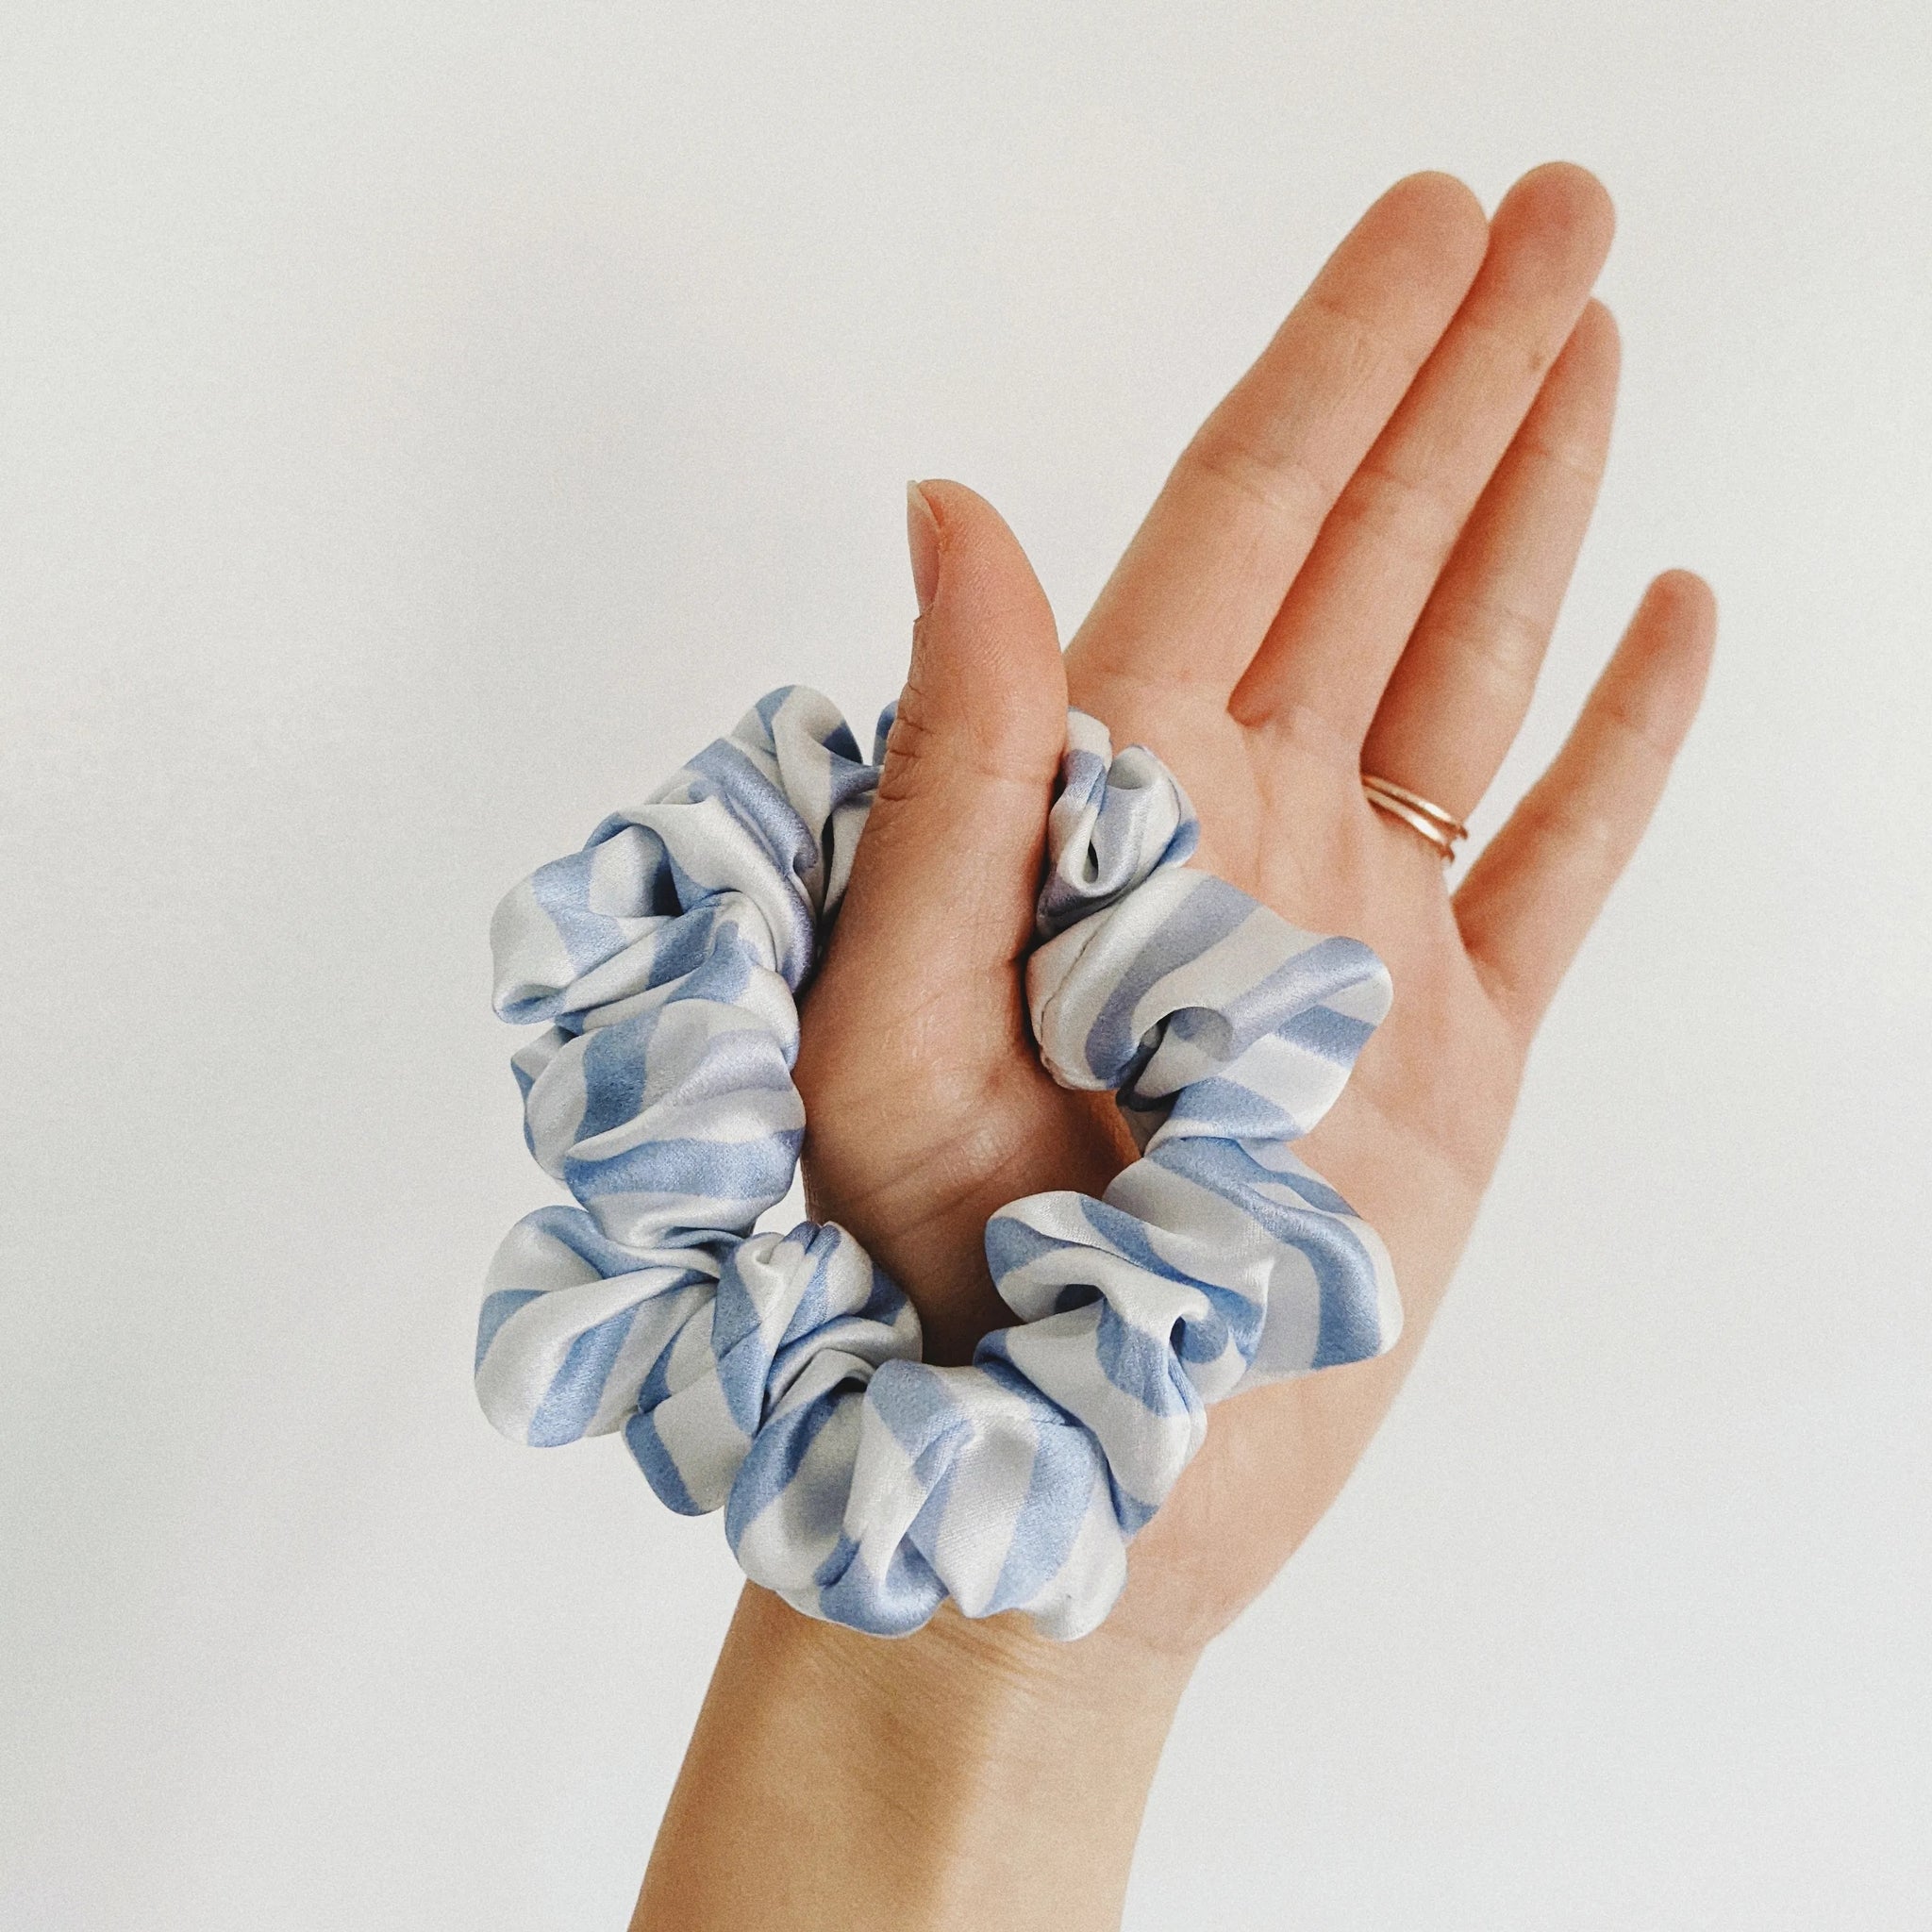 Classic silk scrunchie held in a woman's hand